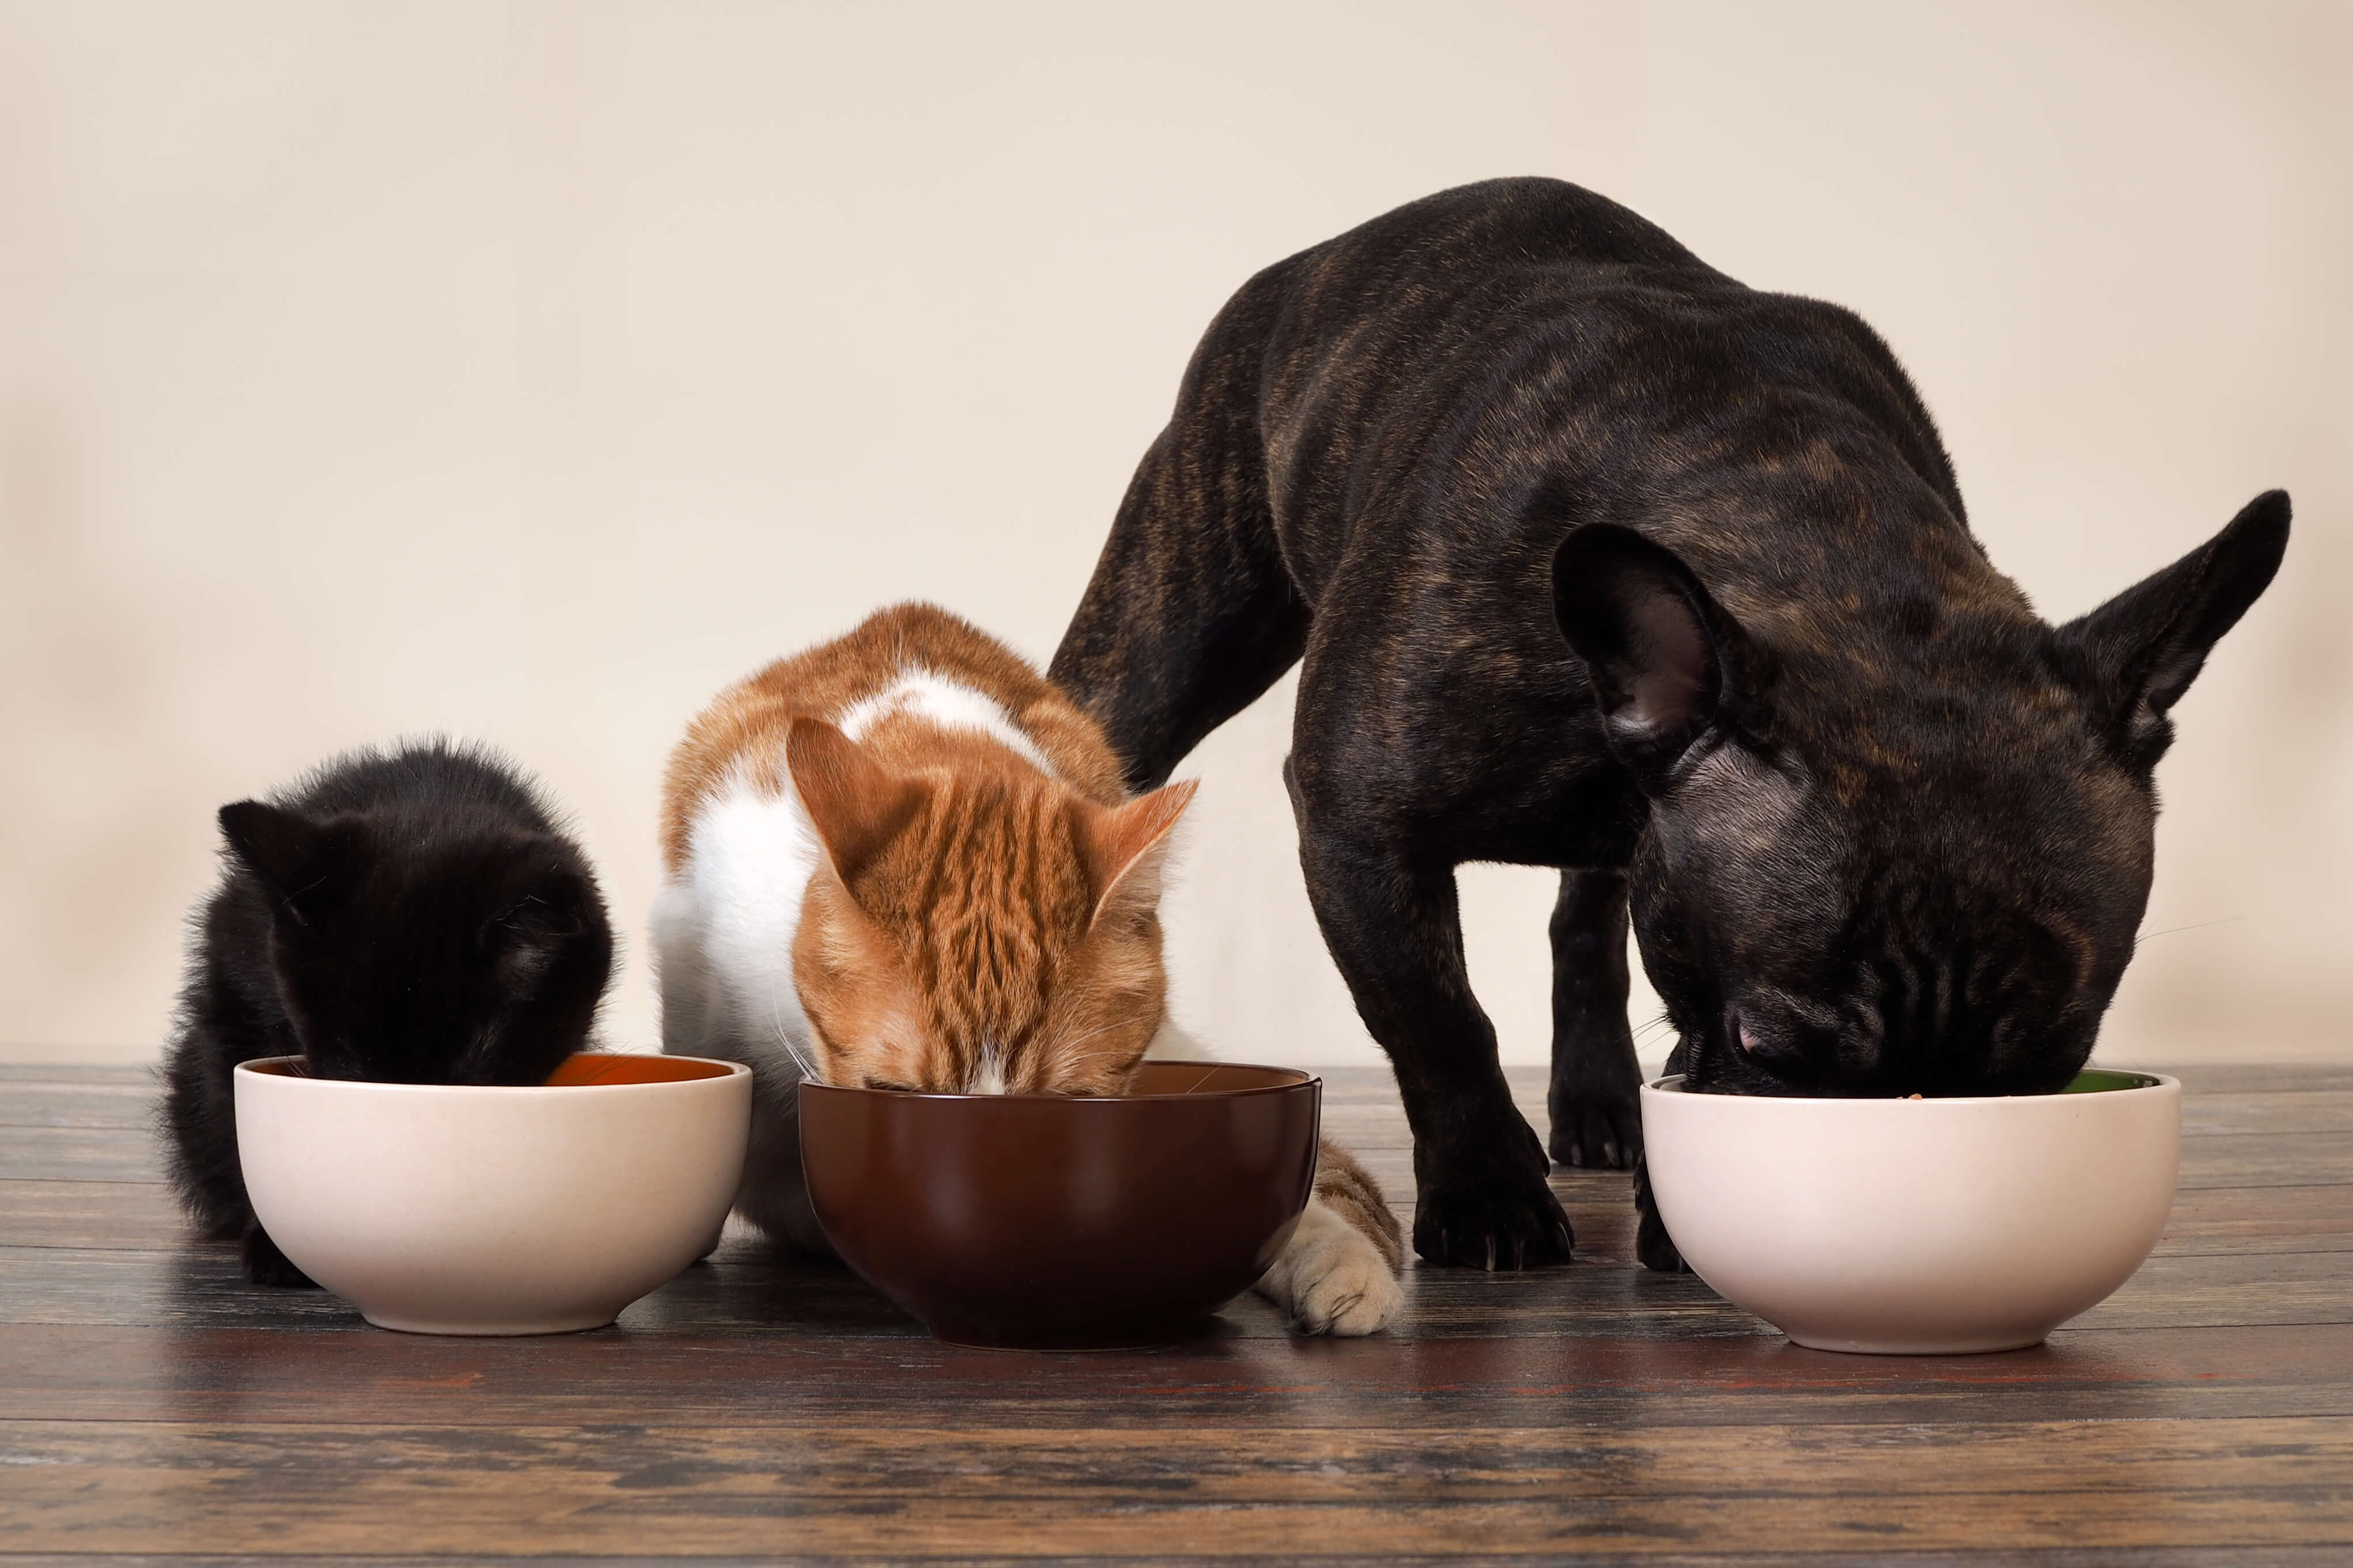 25 Pet Food Storage Tips to Keep Dog Food Fresh